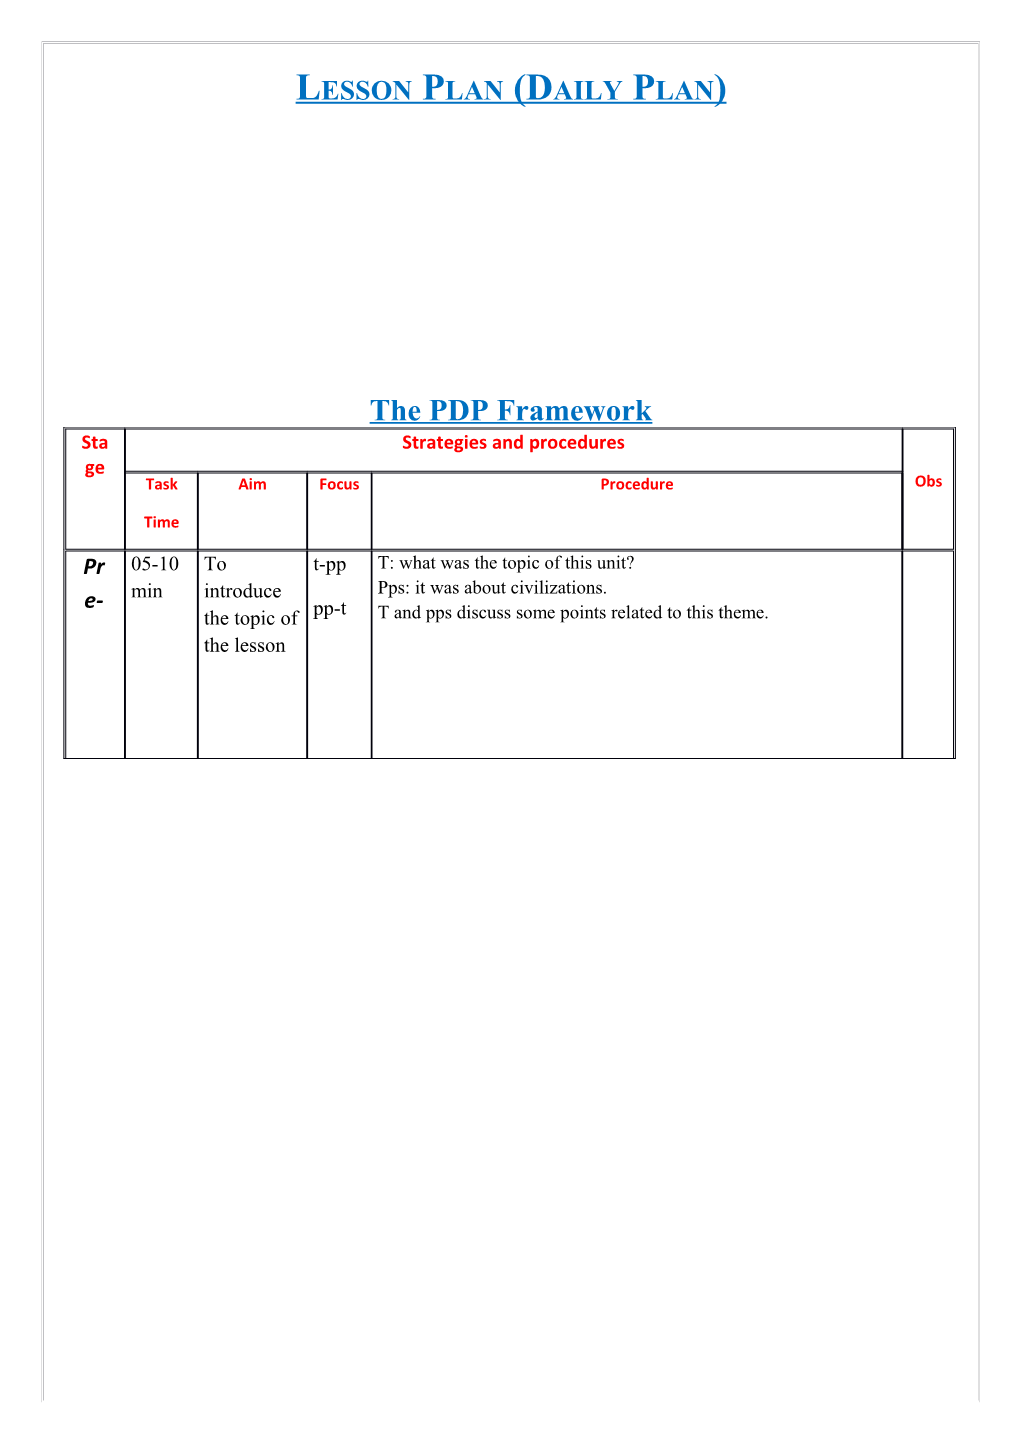 The PDP Framework